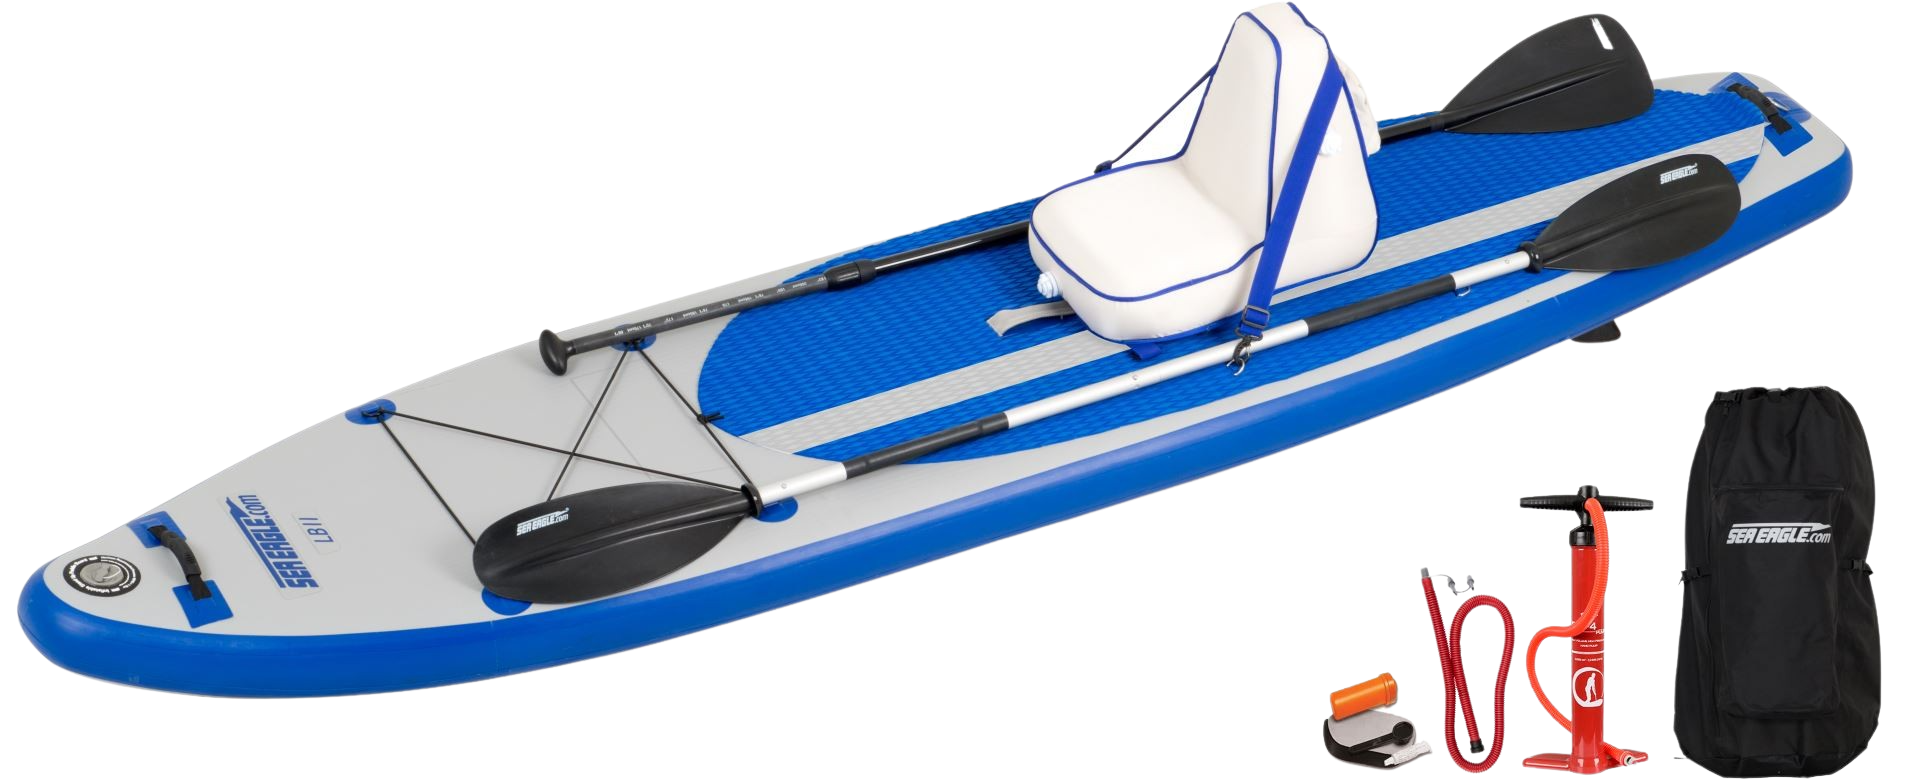 Sea Eagle, Sea Eagle LB11K_D LongBoard 11 Inflatable Board Deluxe Package New